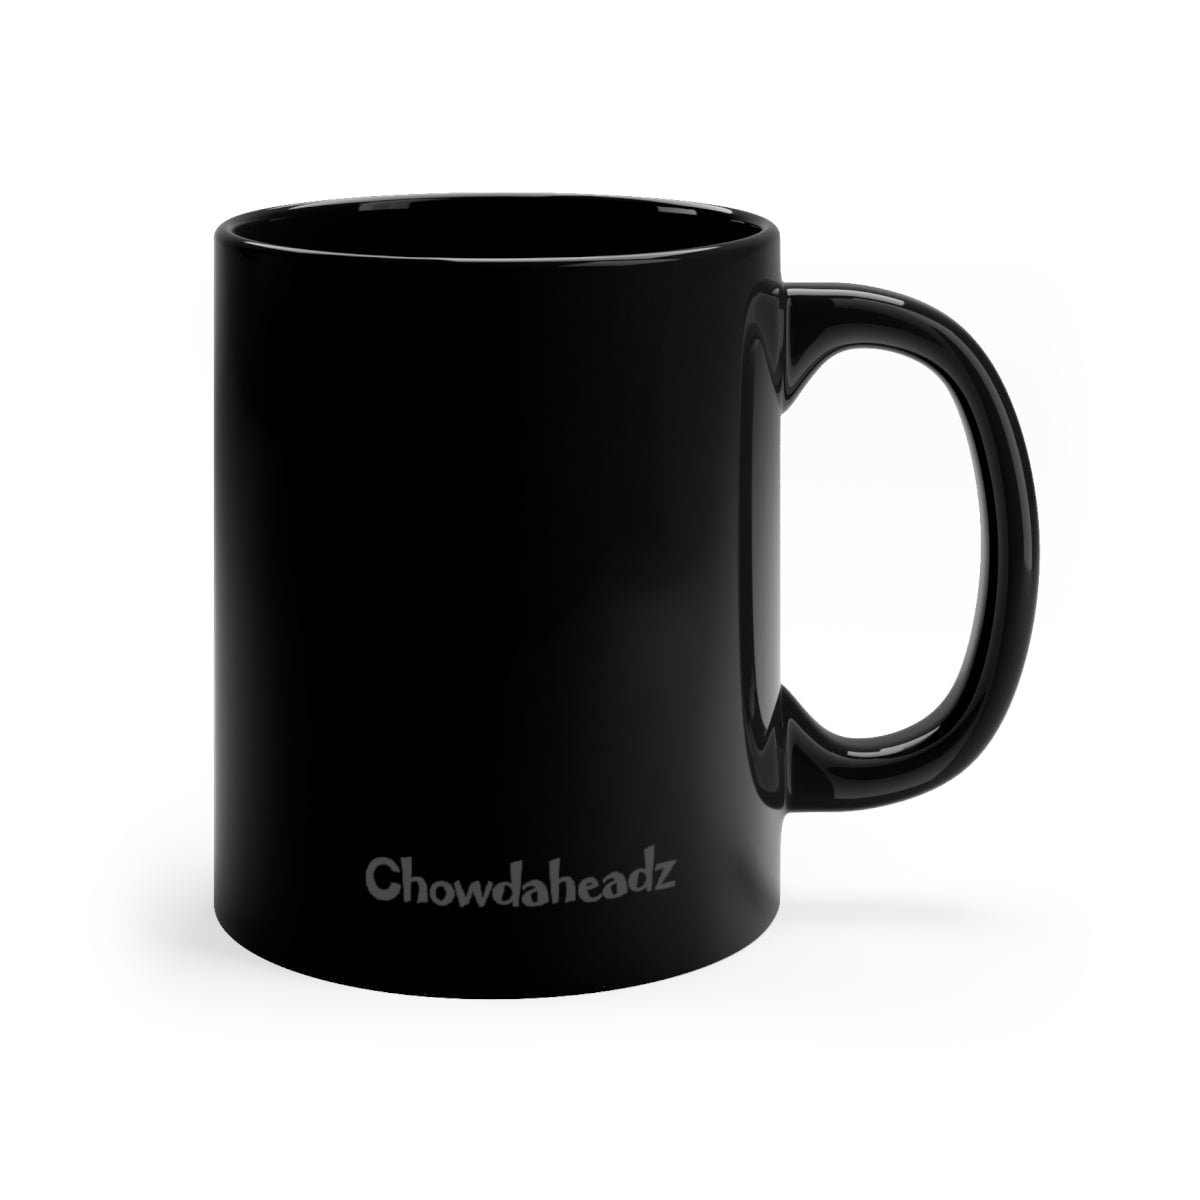 Work Week Pain Scale 11oz Coffee Mug - Chowdaheadz